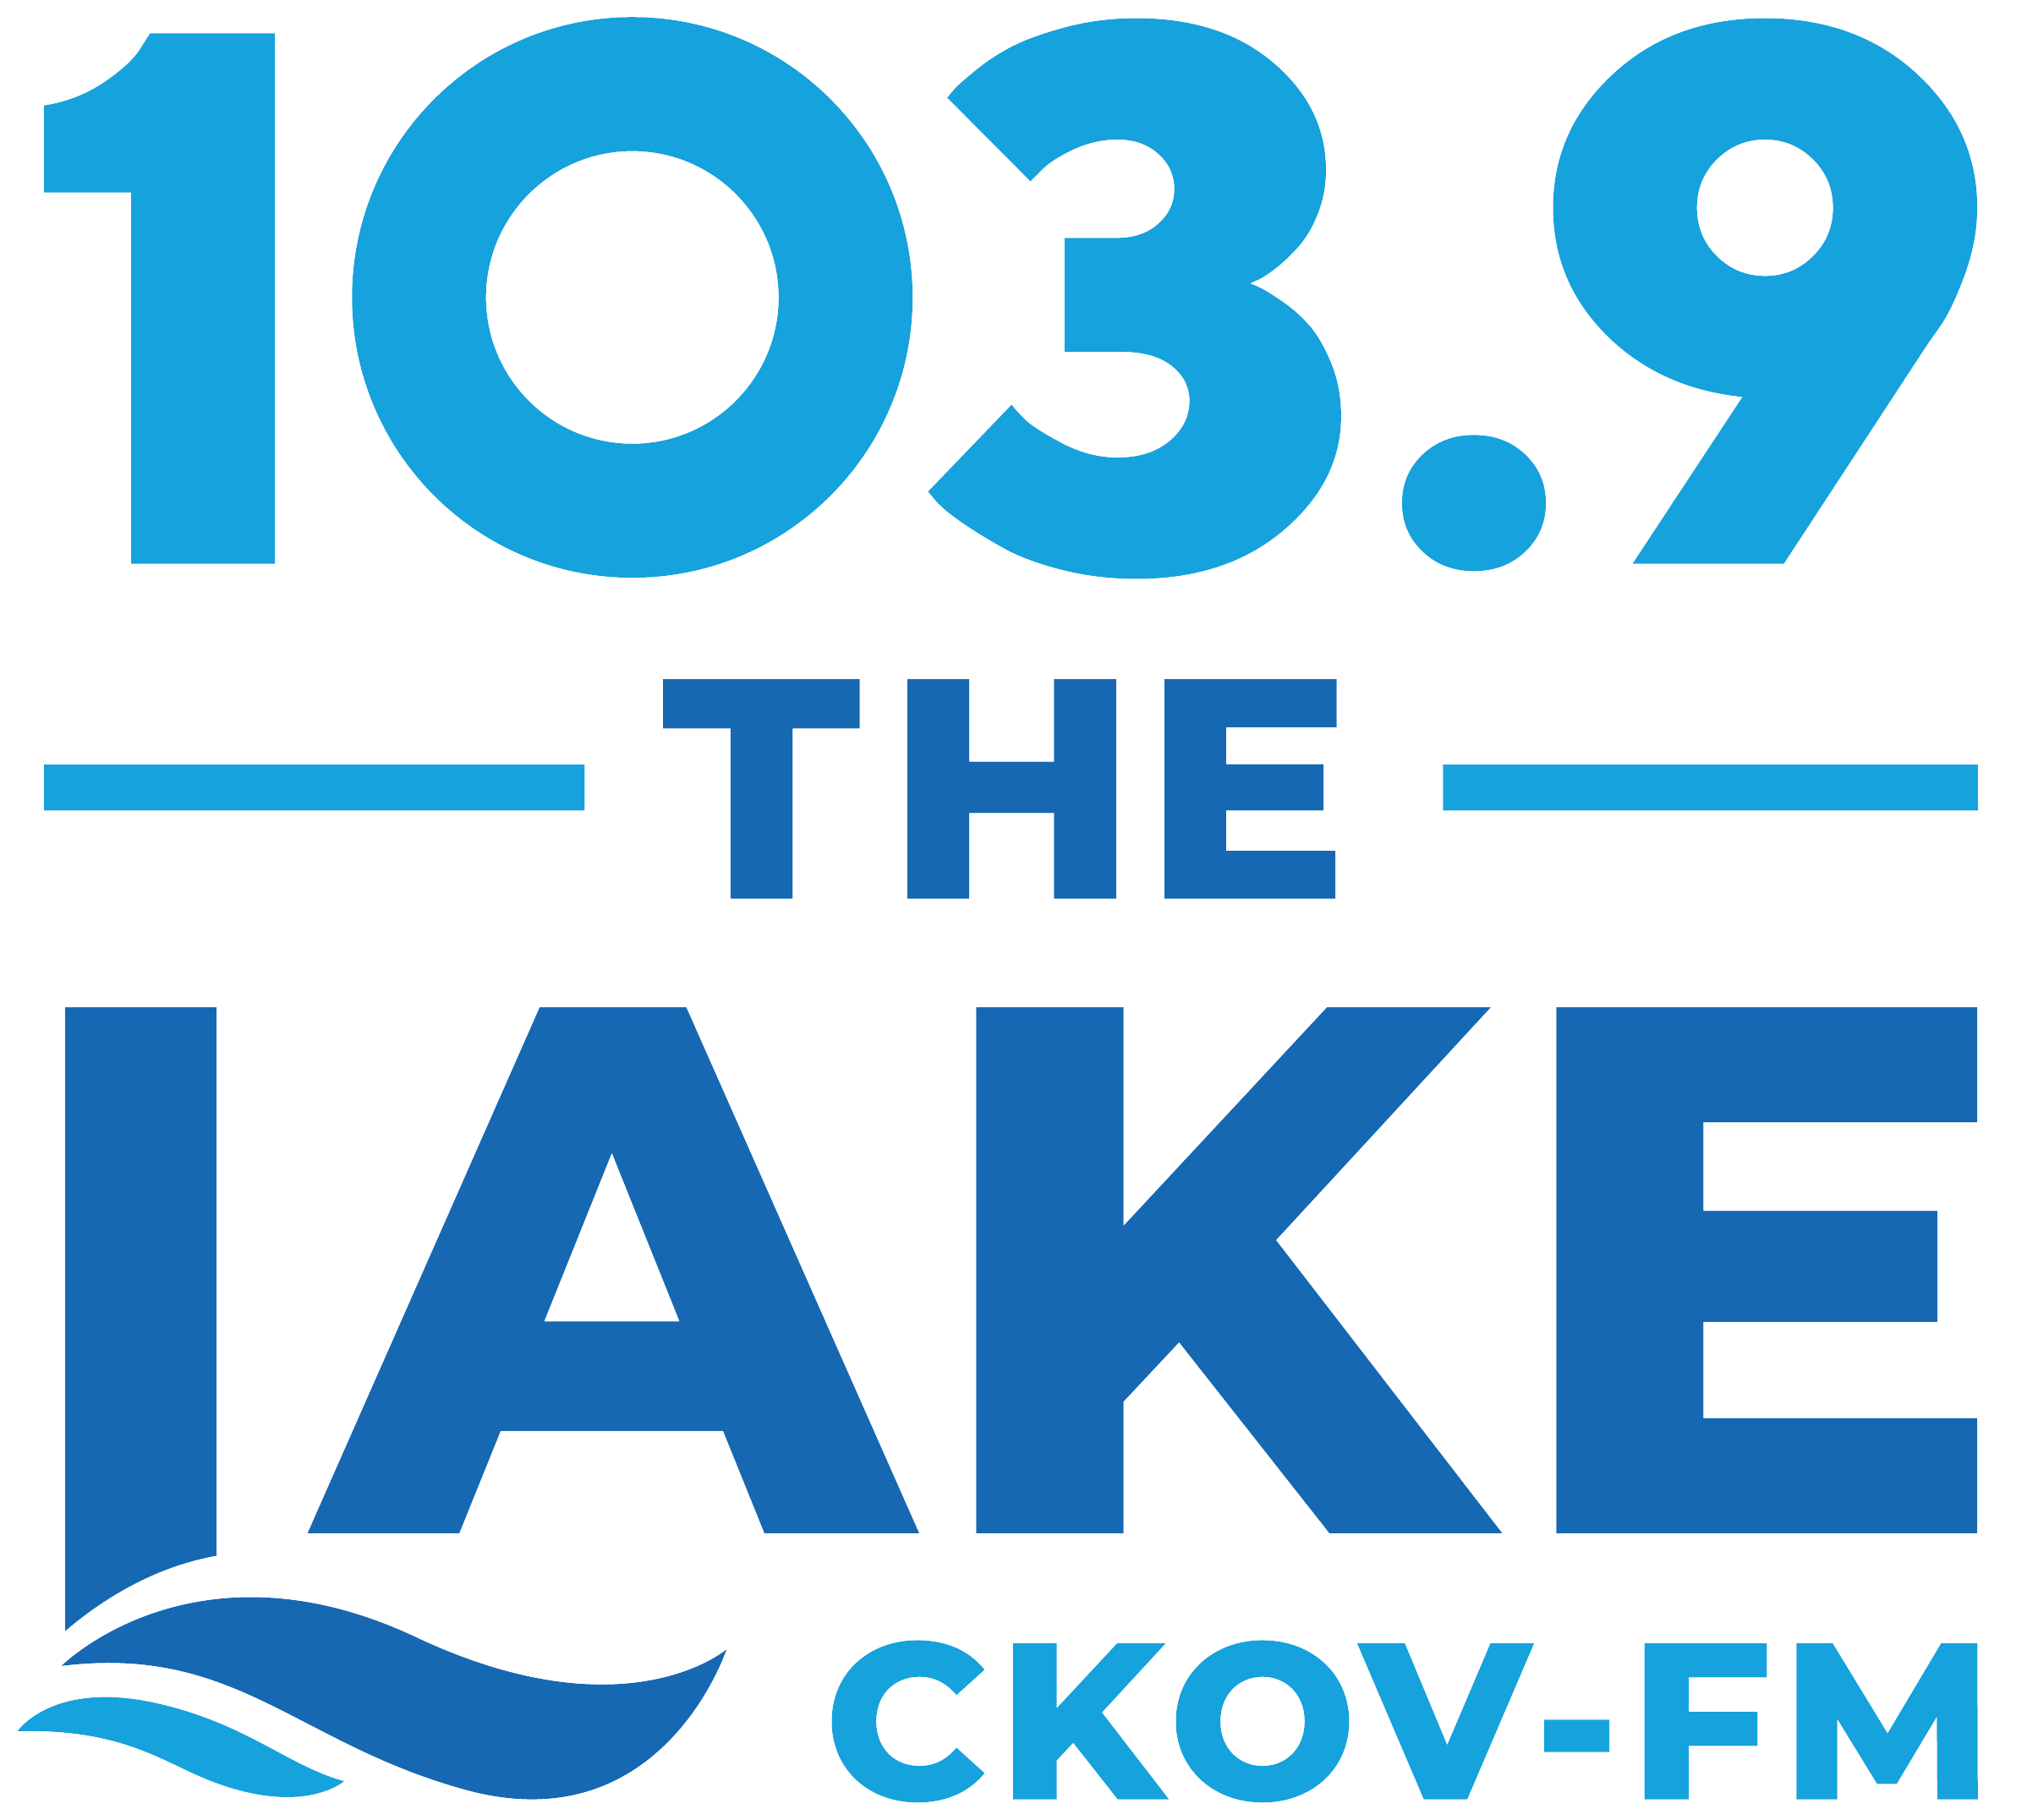 103.9 The Lake